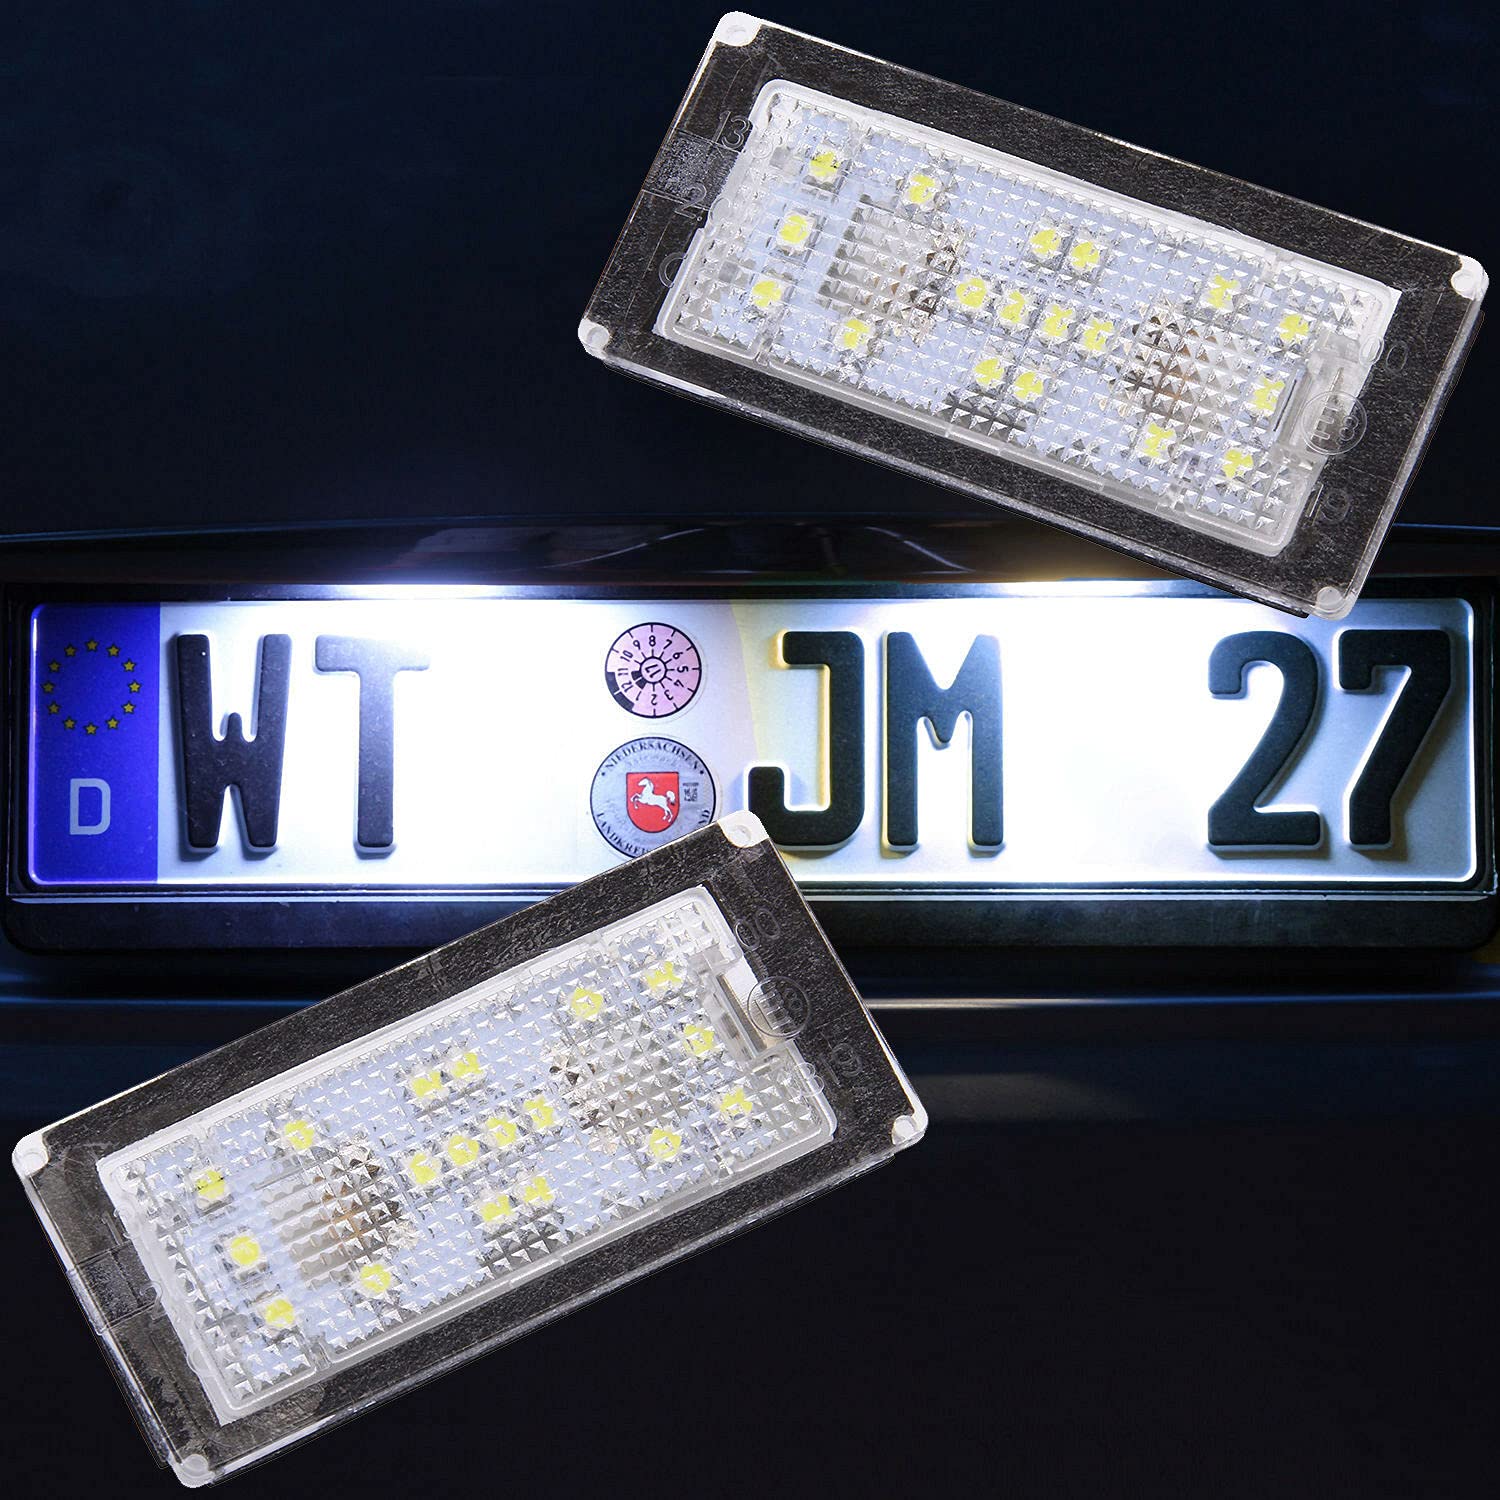 Recambo LED Kennzeichenbeleuchtung passend für BMW 7er E65 E66 E67 Facelift von Recambo